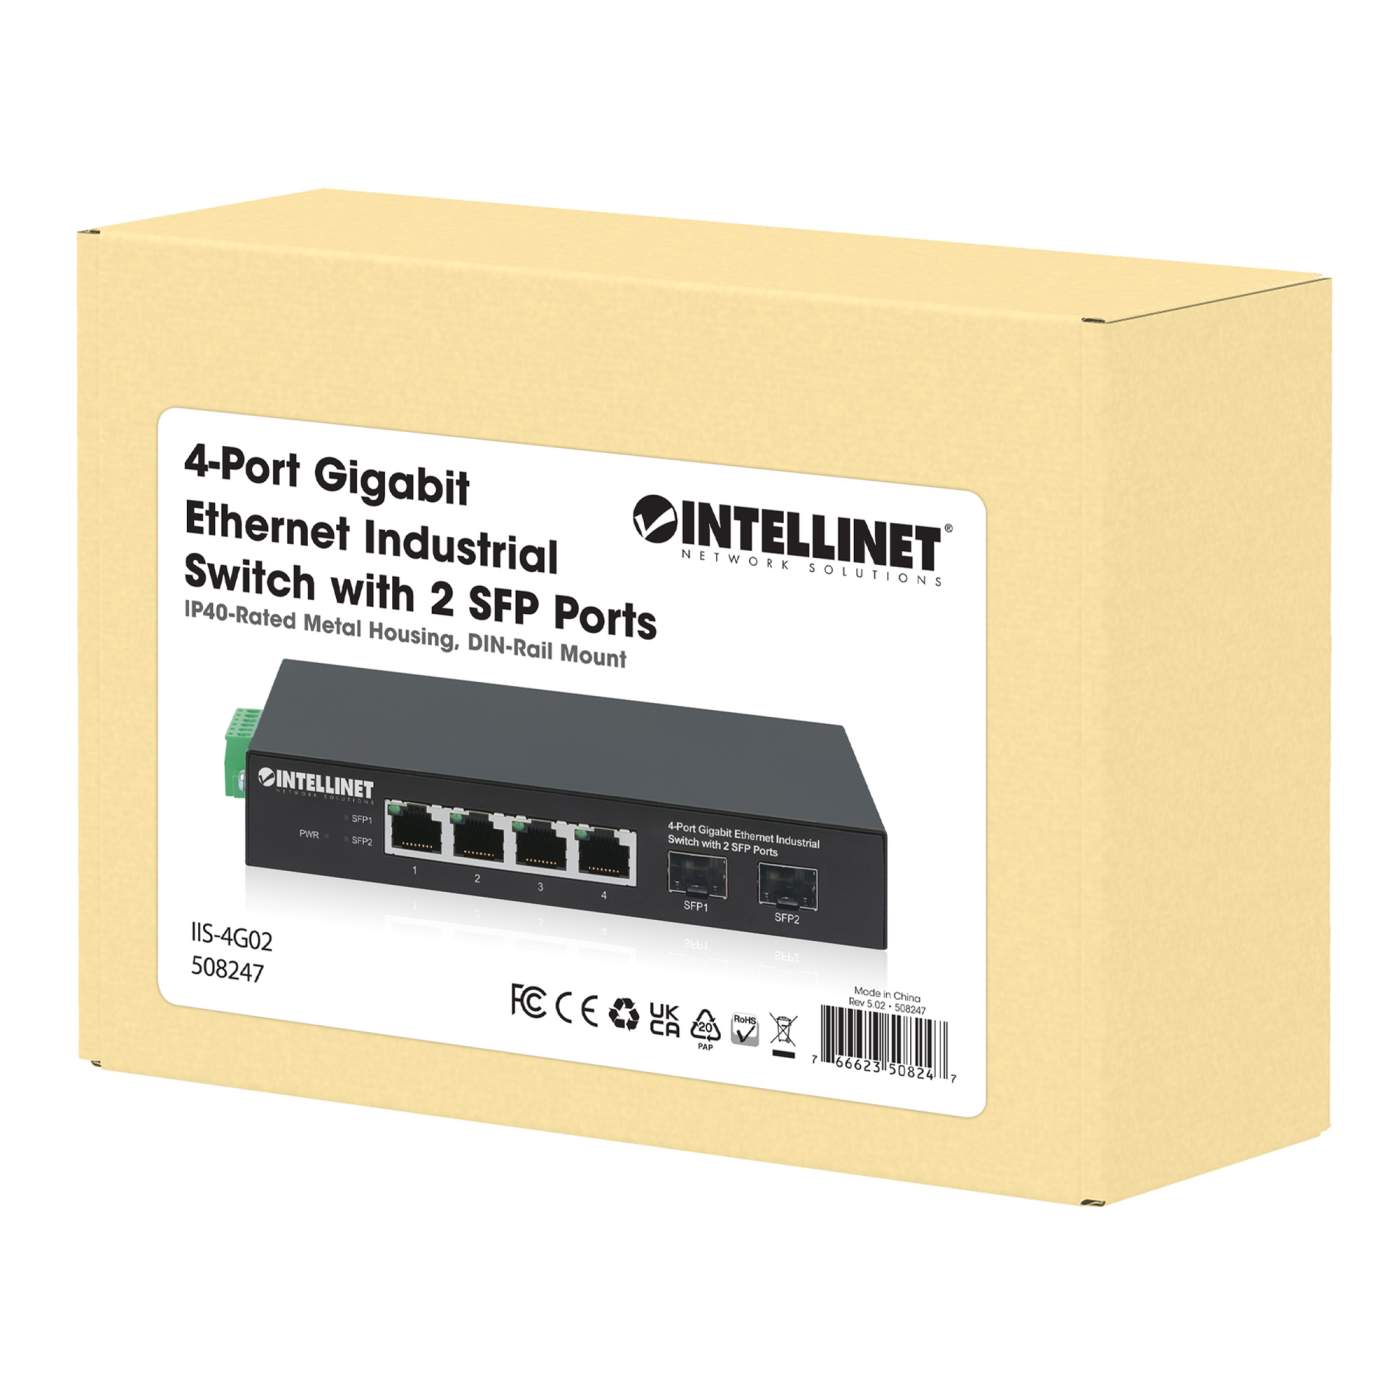 L2+ Industrial Gigabit Managed Switch 4-Port PoE + 2 Gigabit SFP Optical  Ports - LINKOH